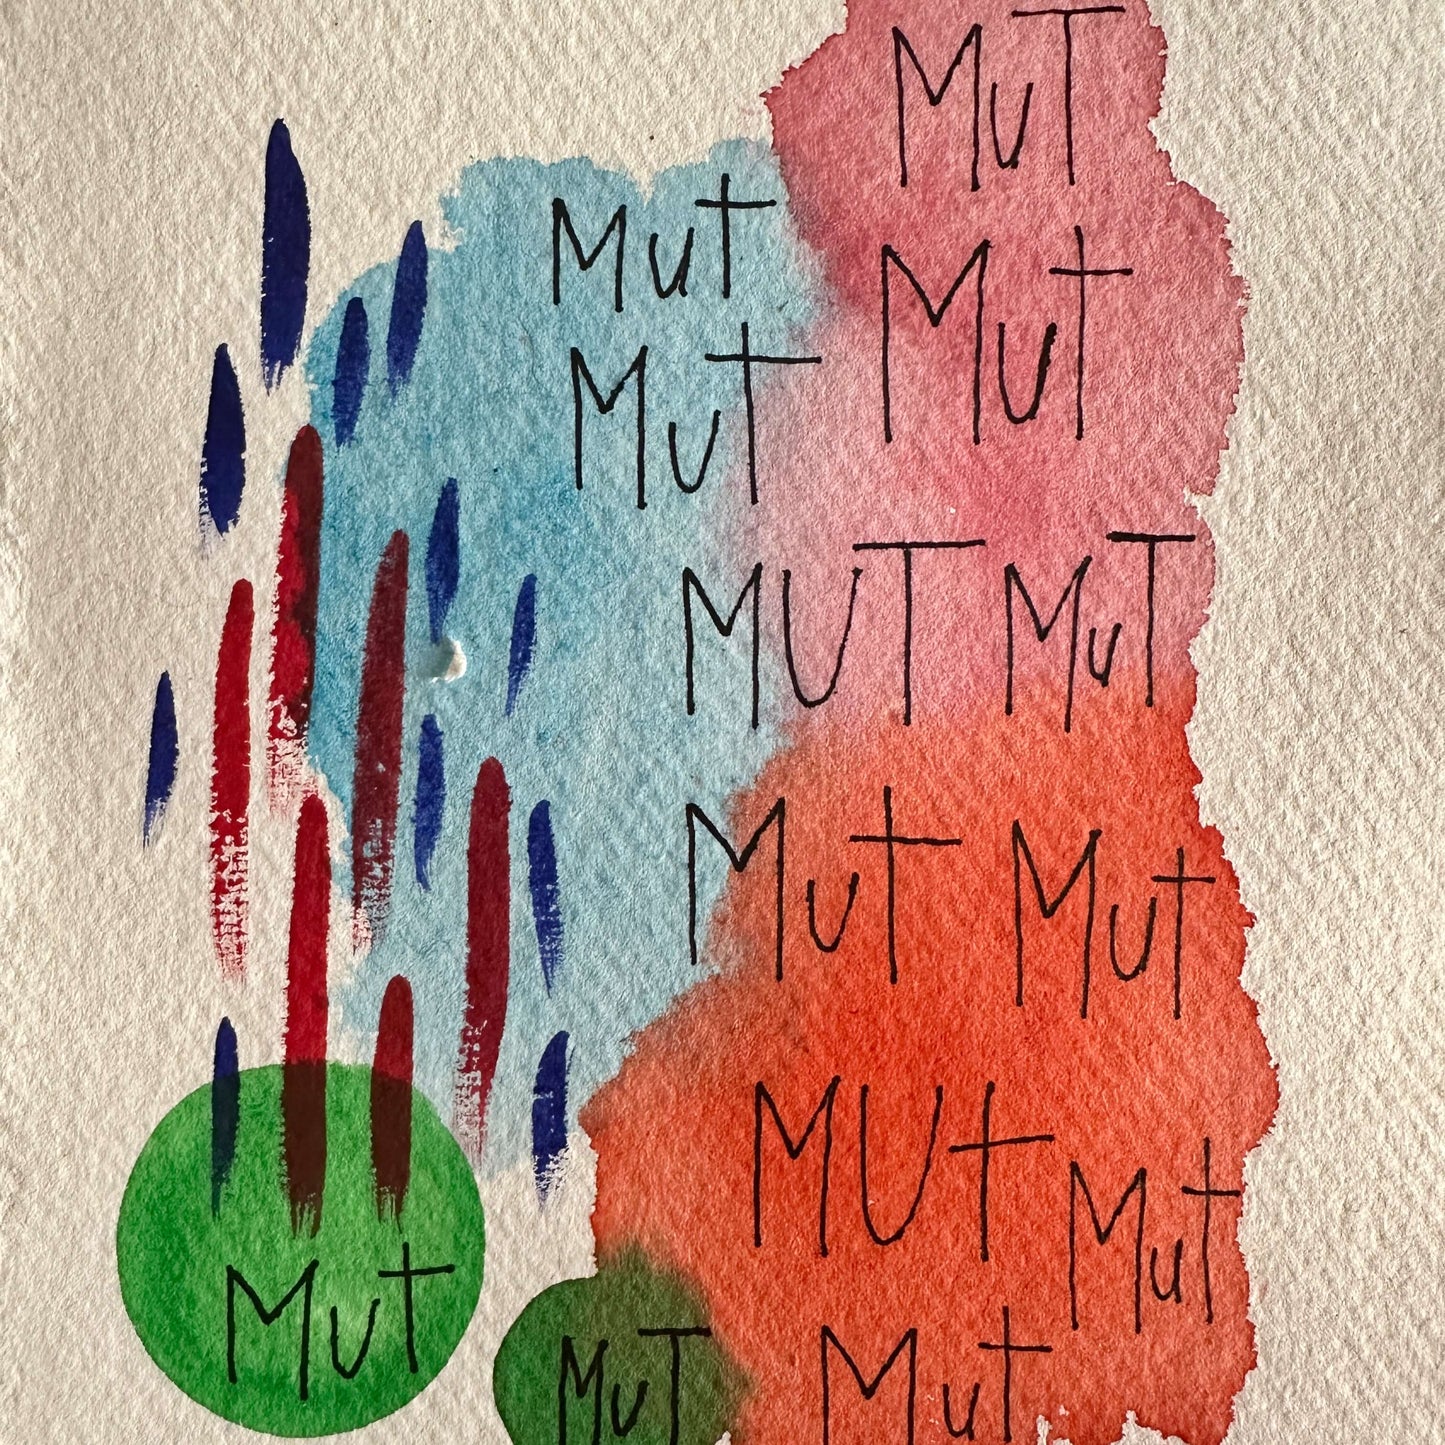 Mut-Paper #89